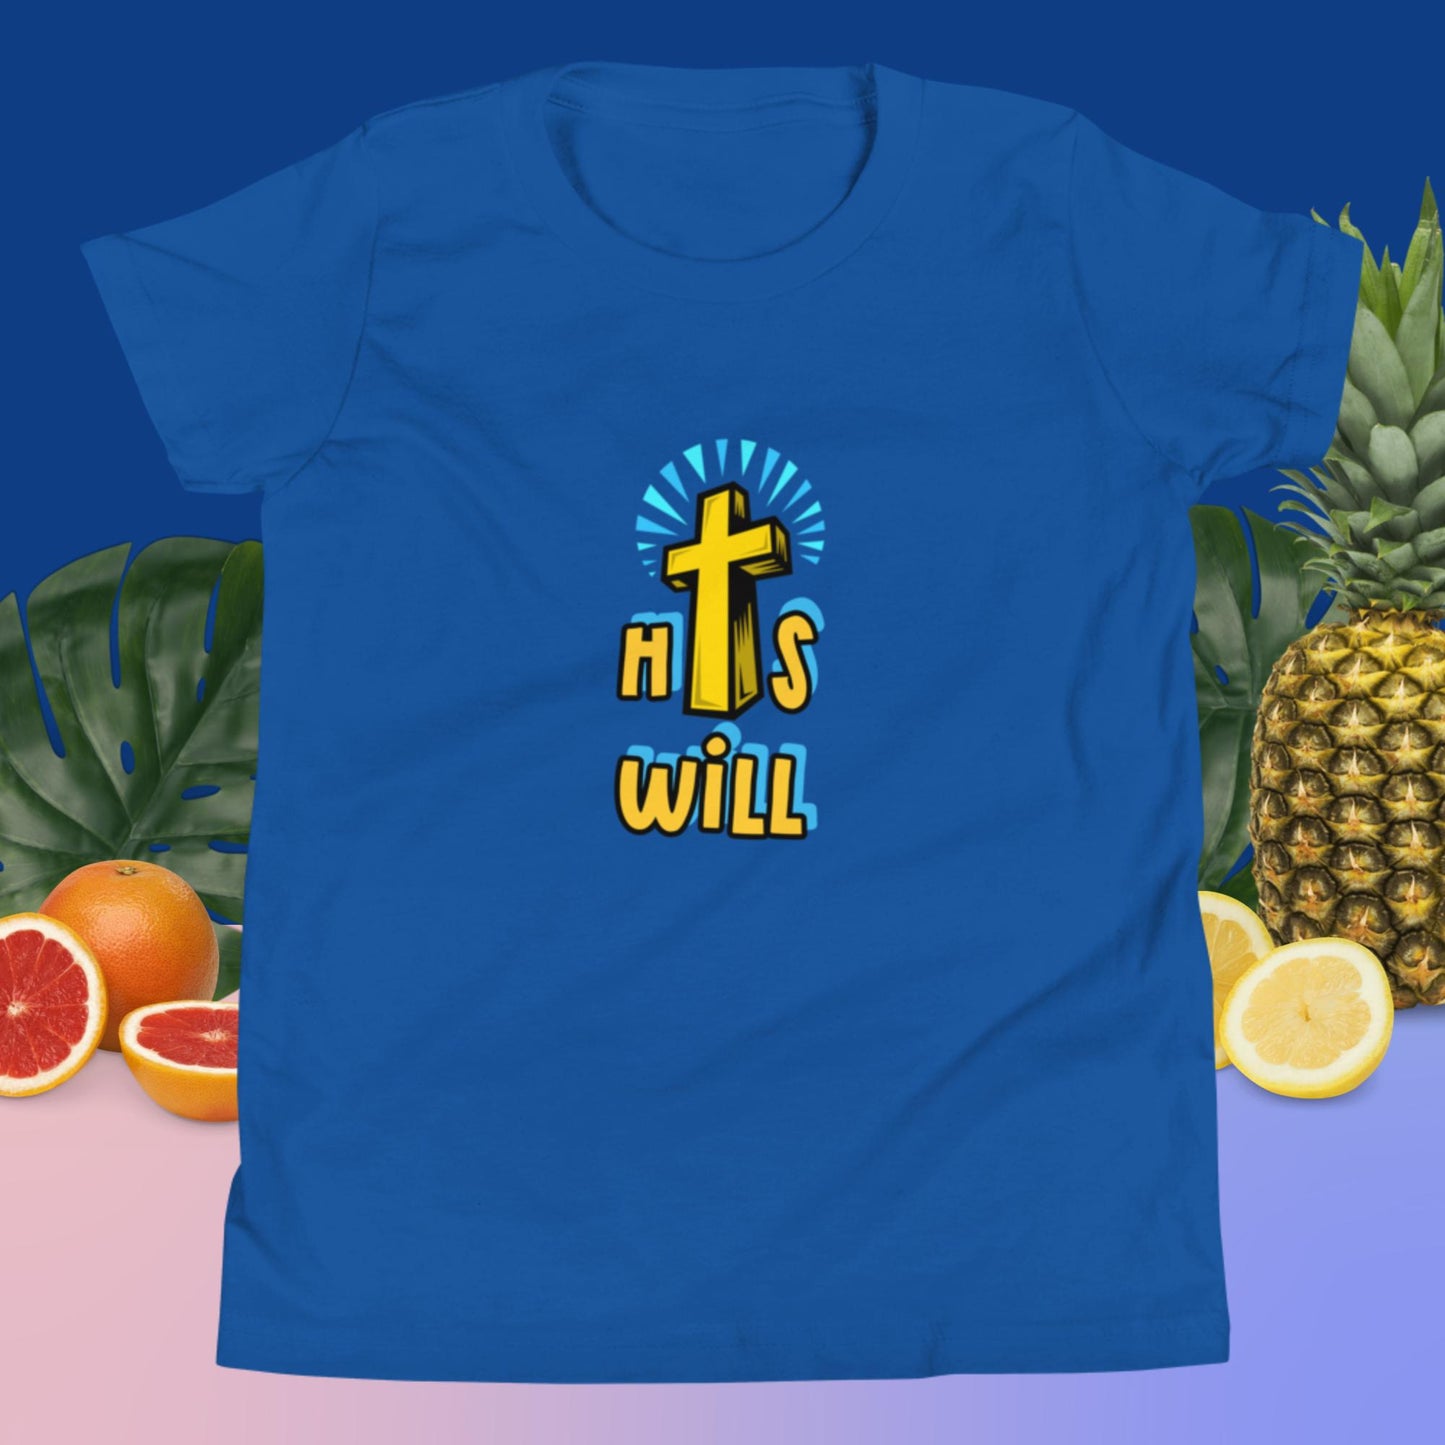 "HIS WILL" Kids Short Sleeve T-Shirt